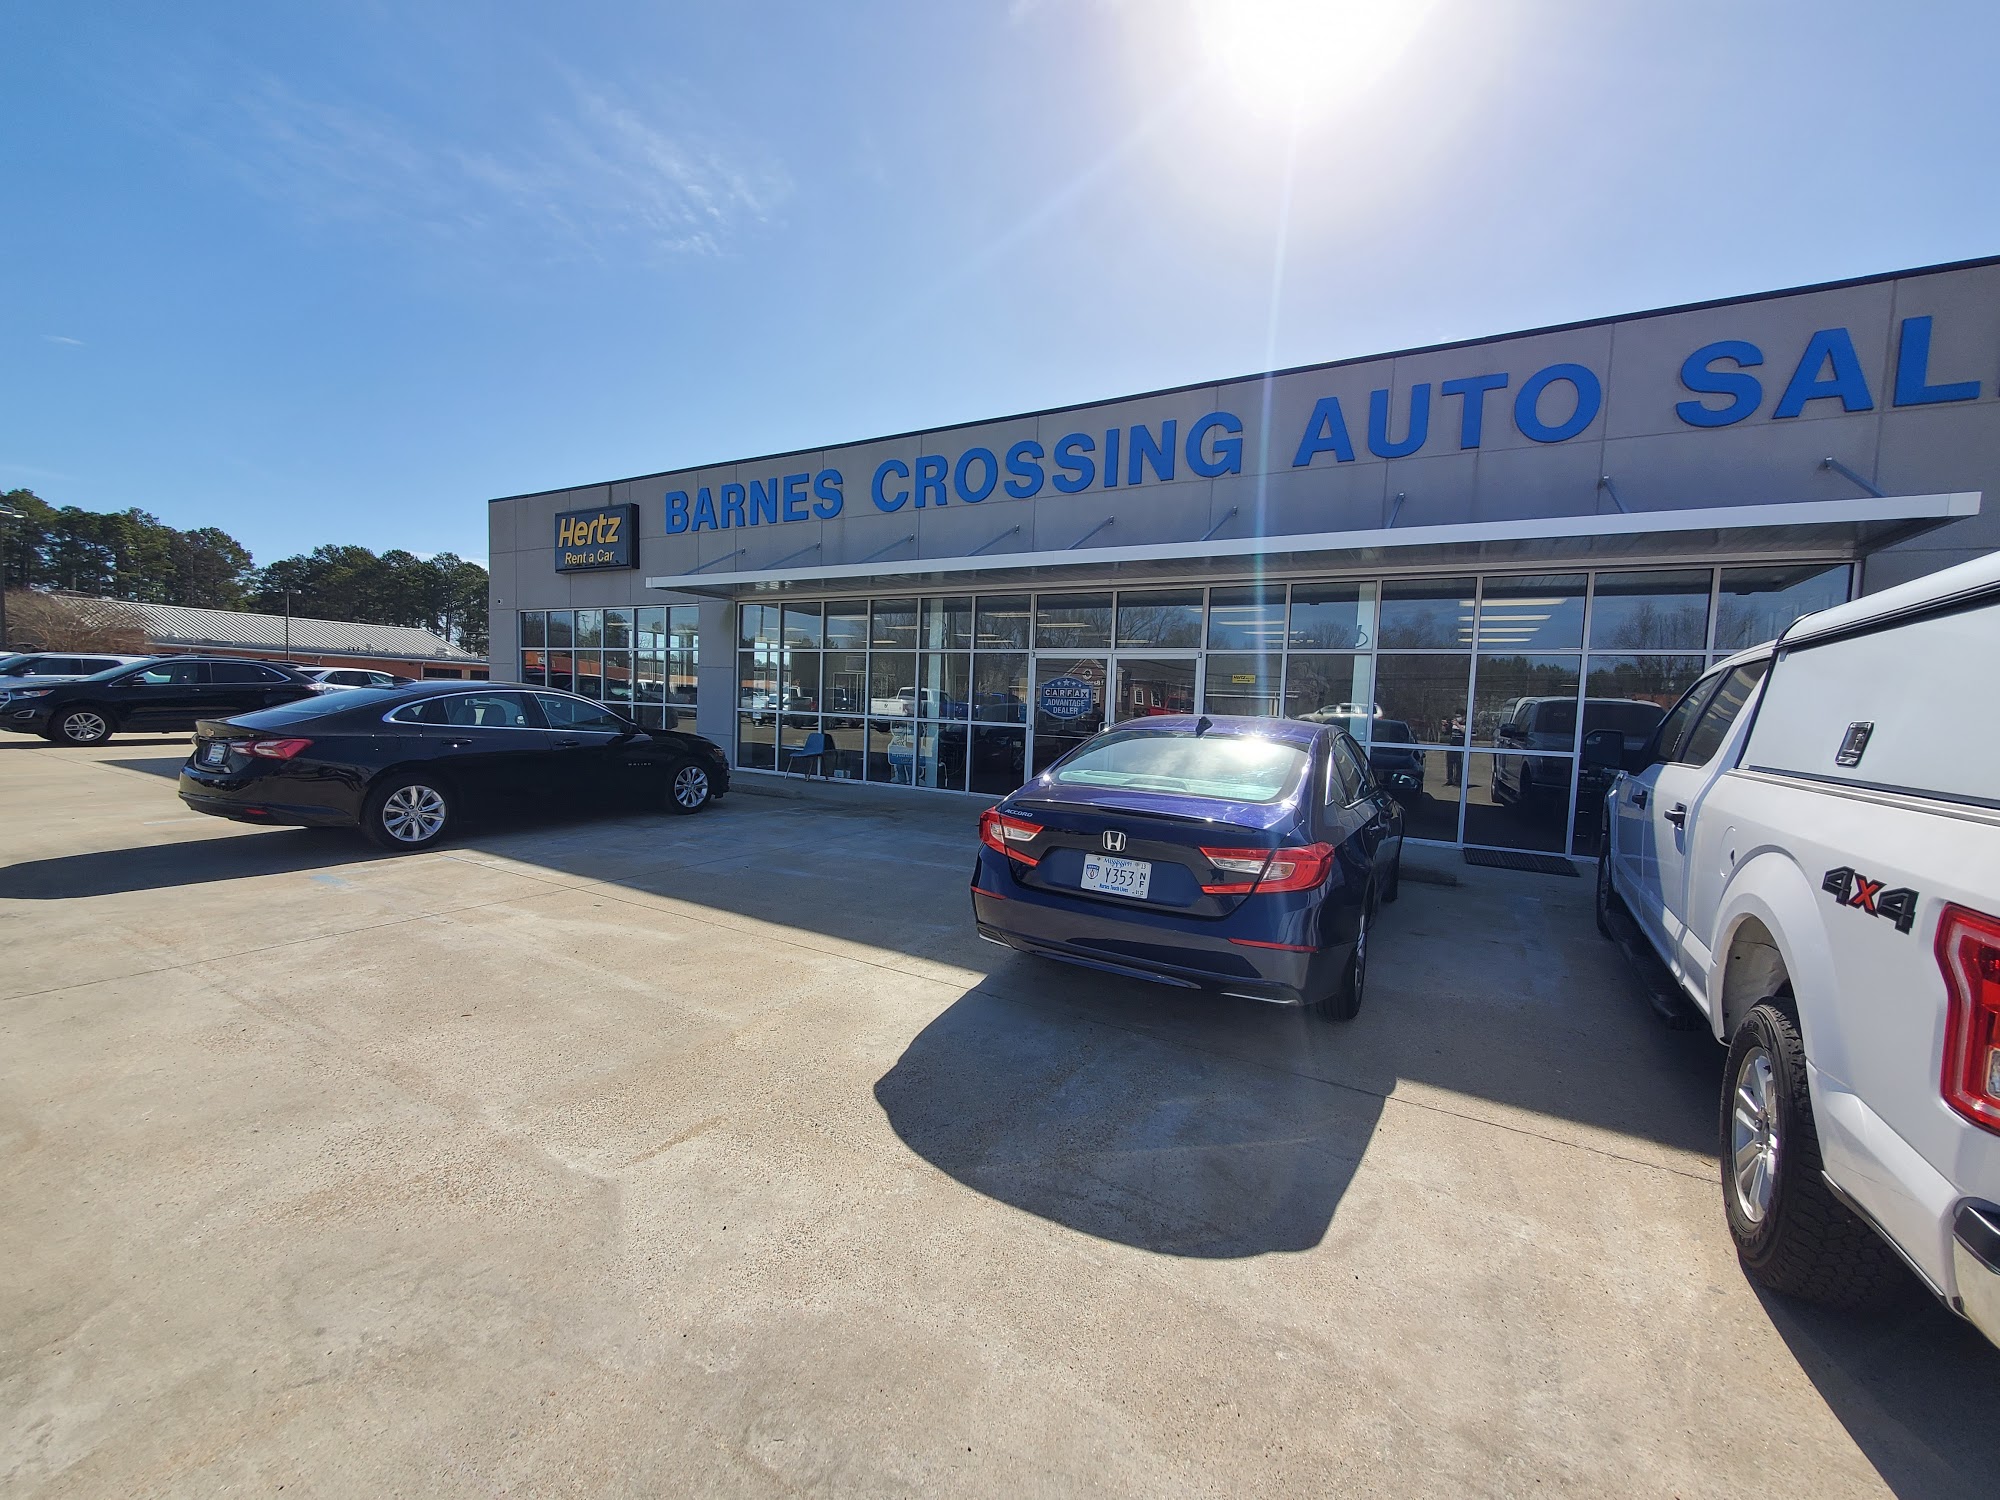 Barnes Crossing Auto Sales and Service